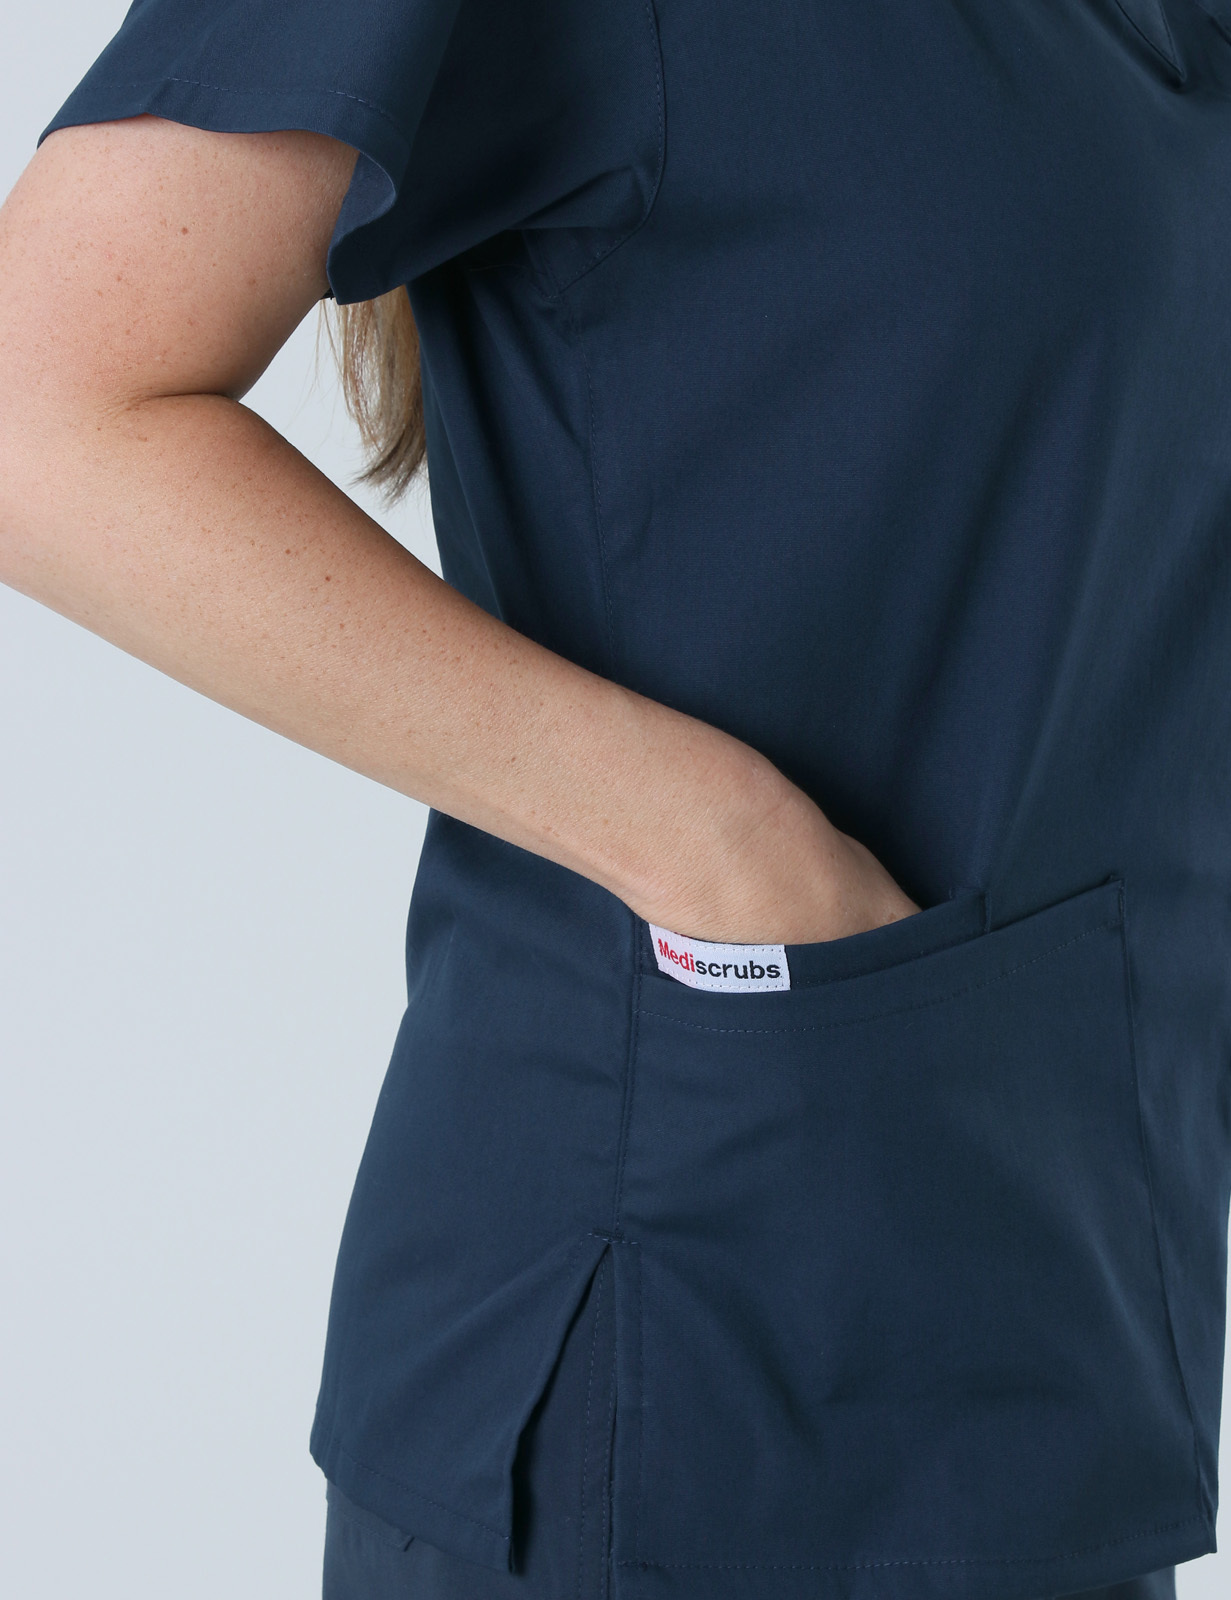 Canberra Hospital - Emergency Department (MHAU) (4 Pocket Scrub Top and Cargo Pants incl Logos)